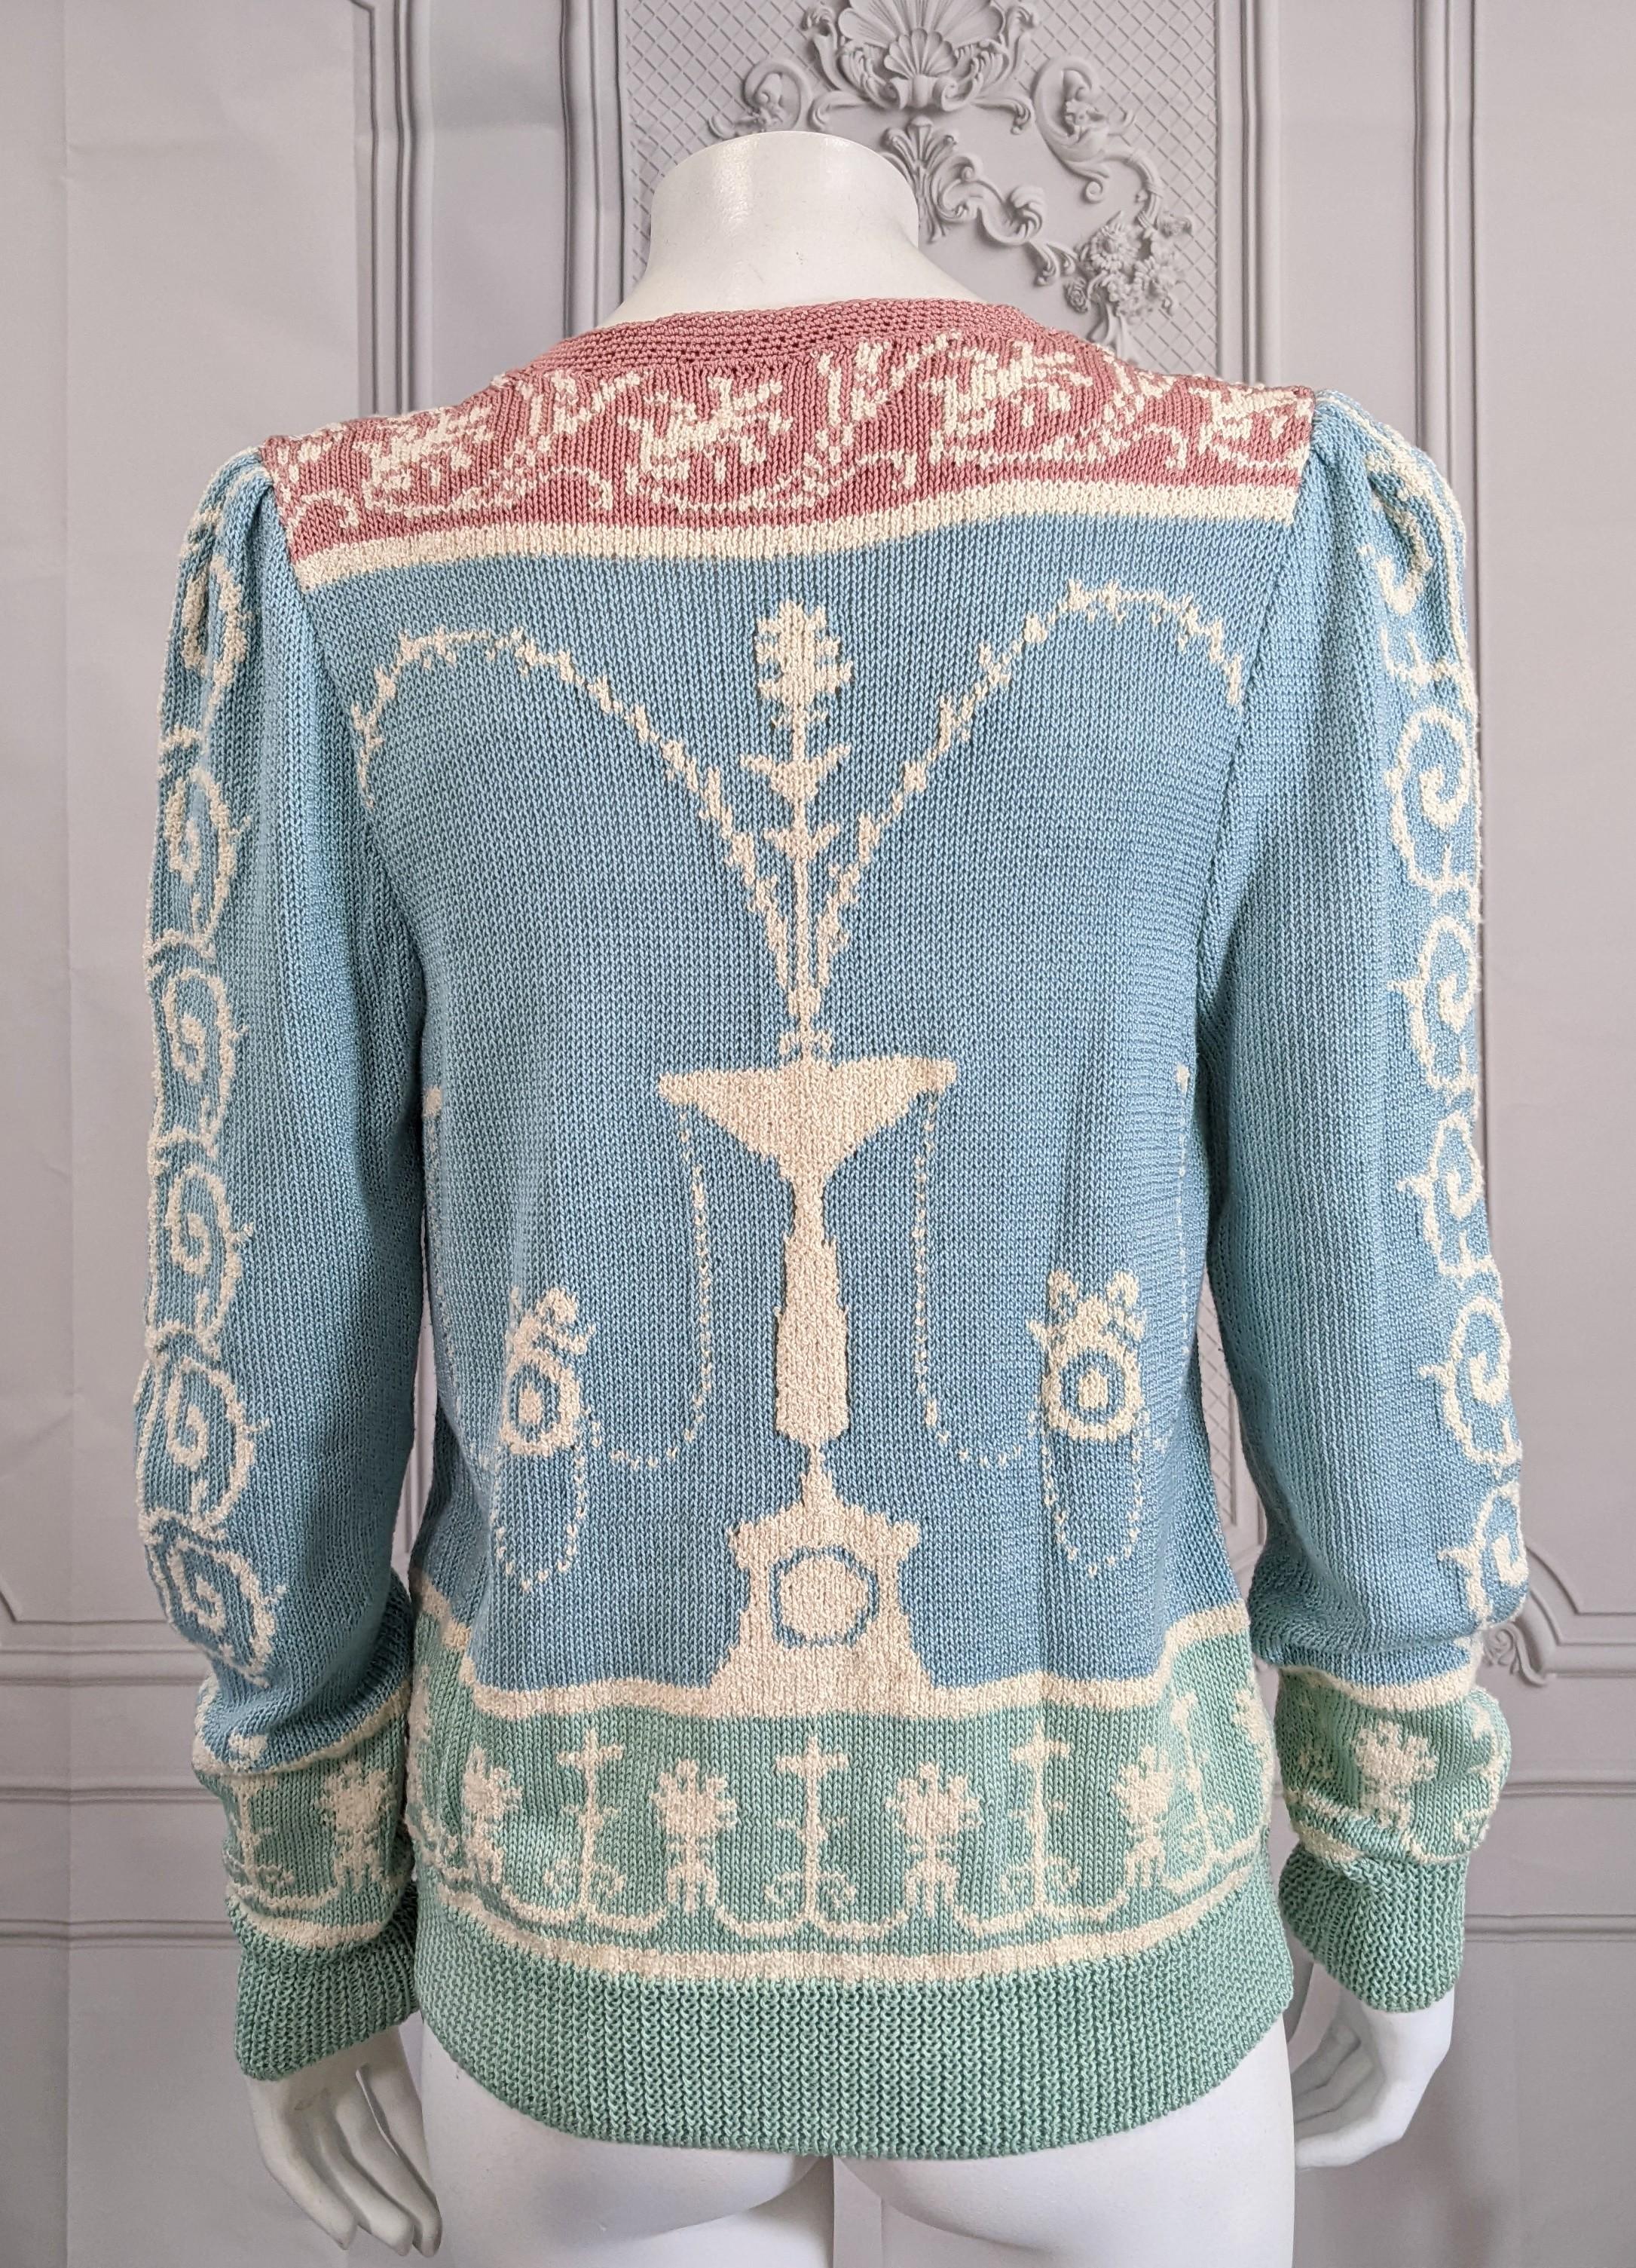 Women's or Men's Handknit Cotton Sweater, Adams Style, Dia North of Boston For Sale